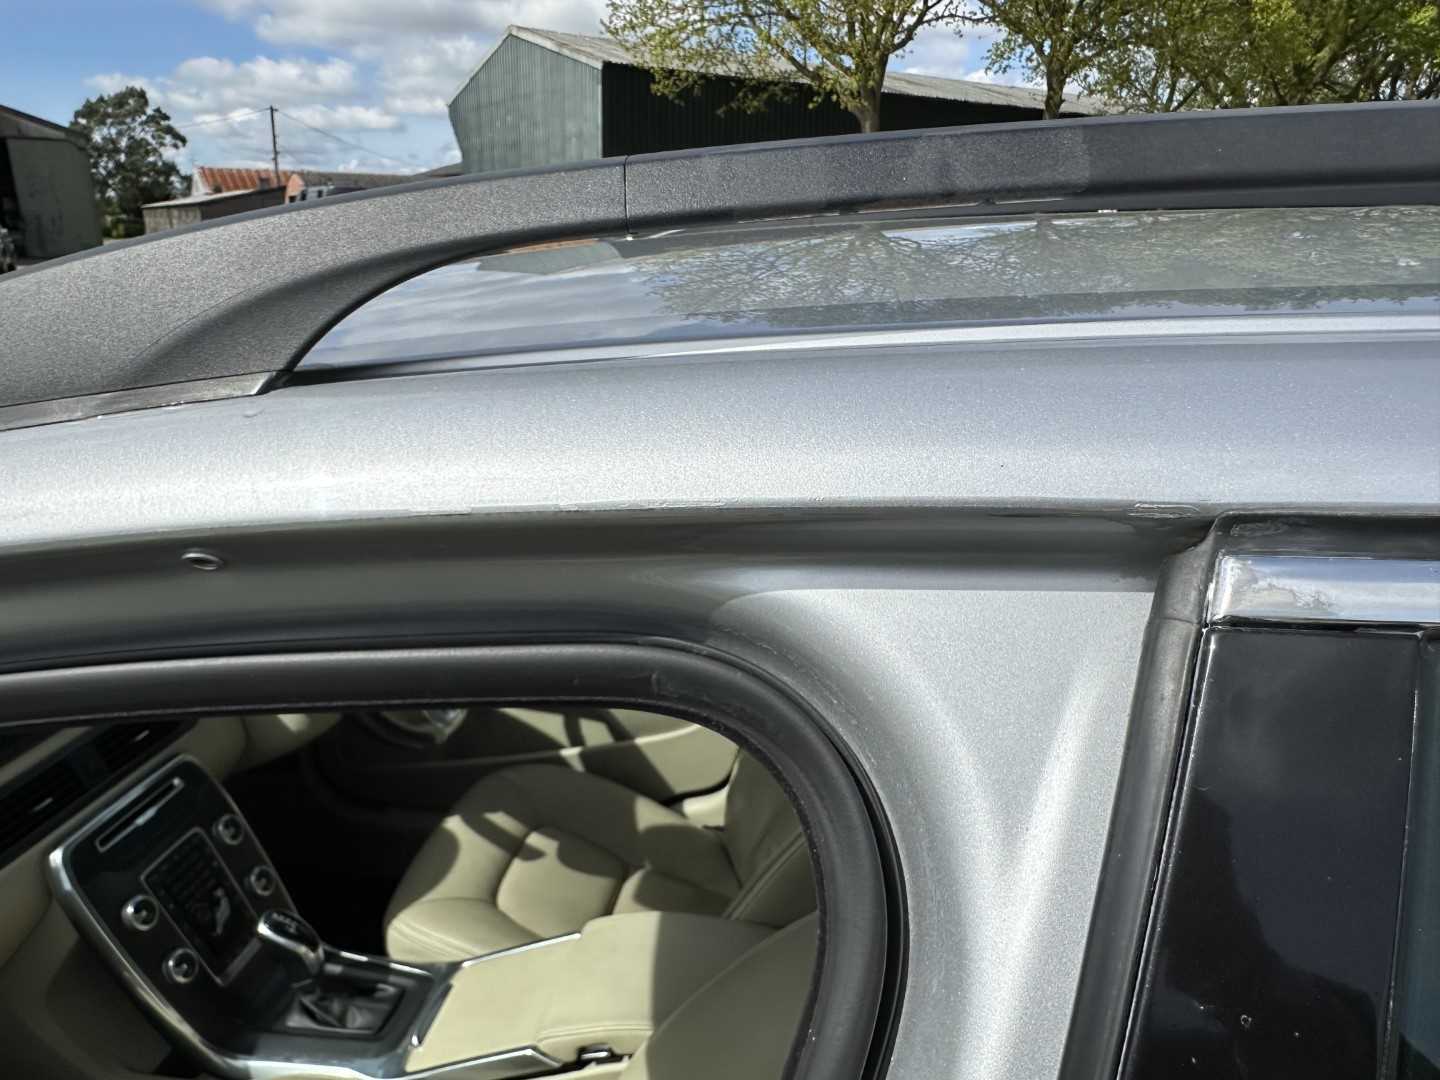 2014 Volvo XC70 SE Lux D5 AWD automatic, 5 door estate, reg. no. KS14 MFP - Bild 22 aus 29